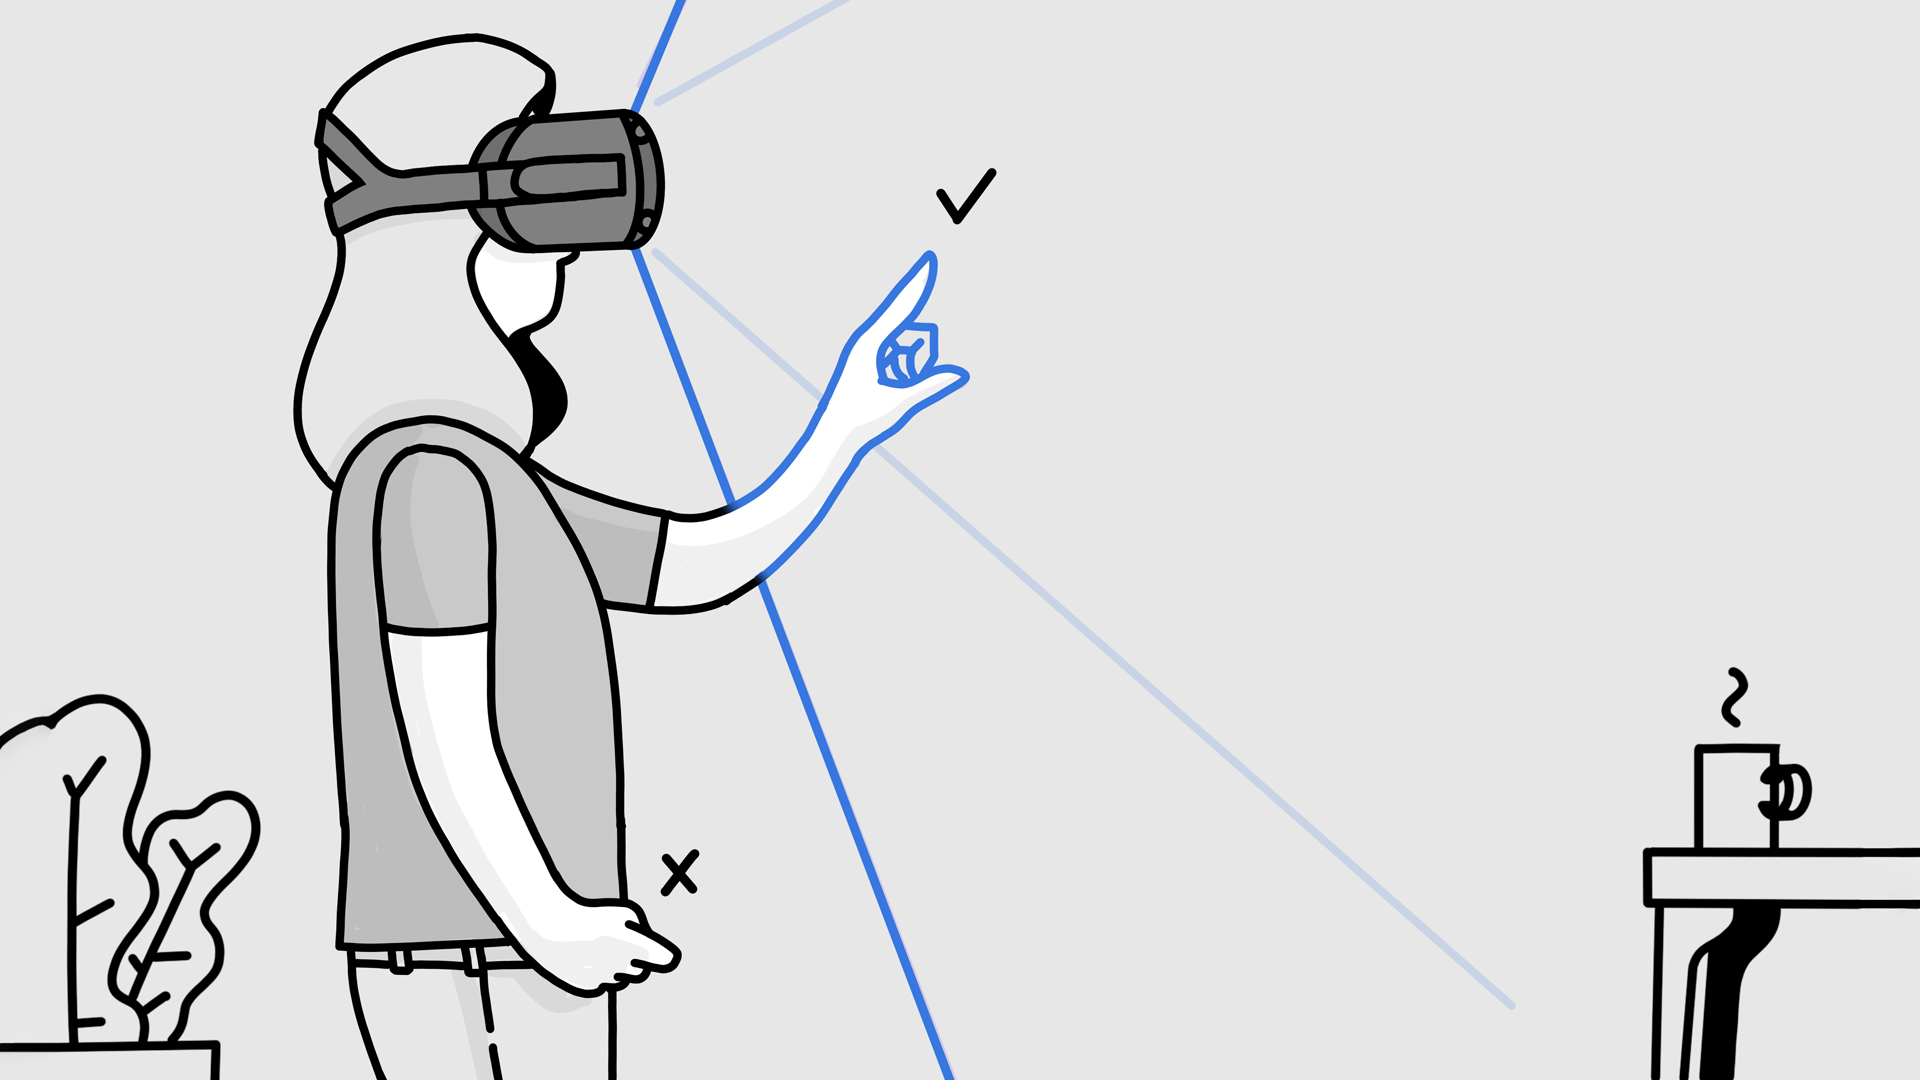 oculus rift s hand tracking 2020